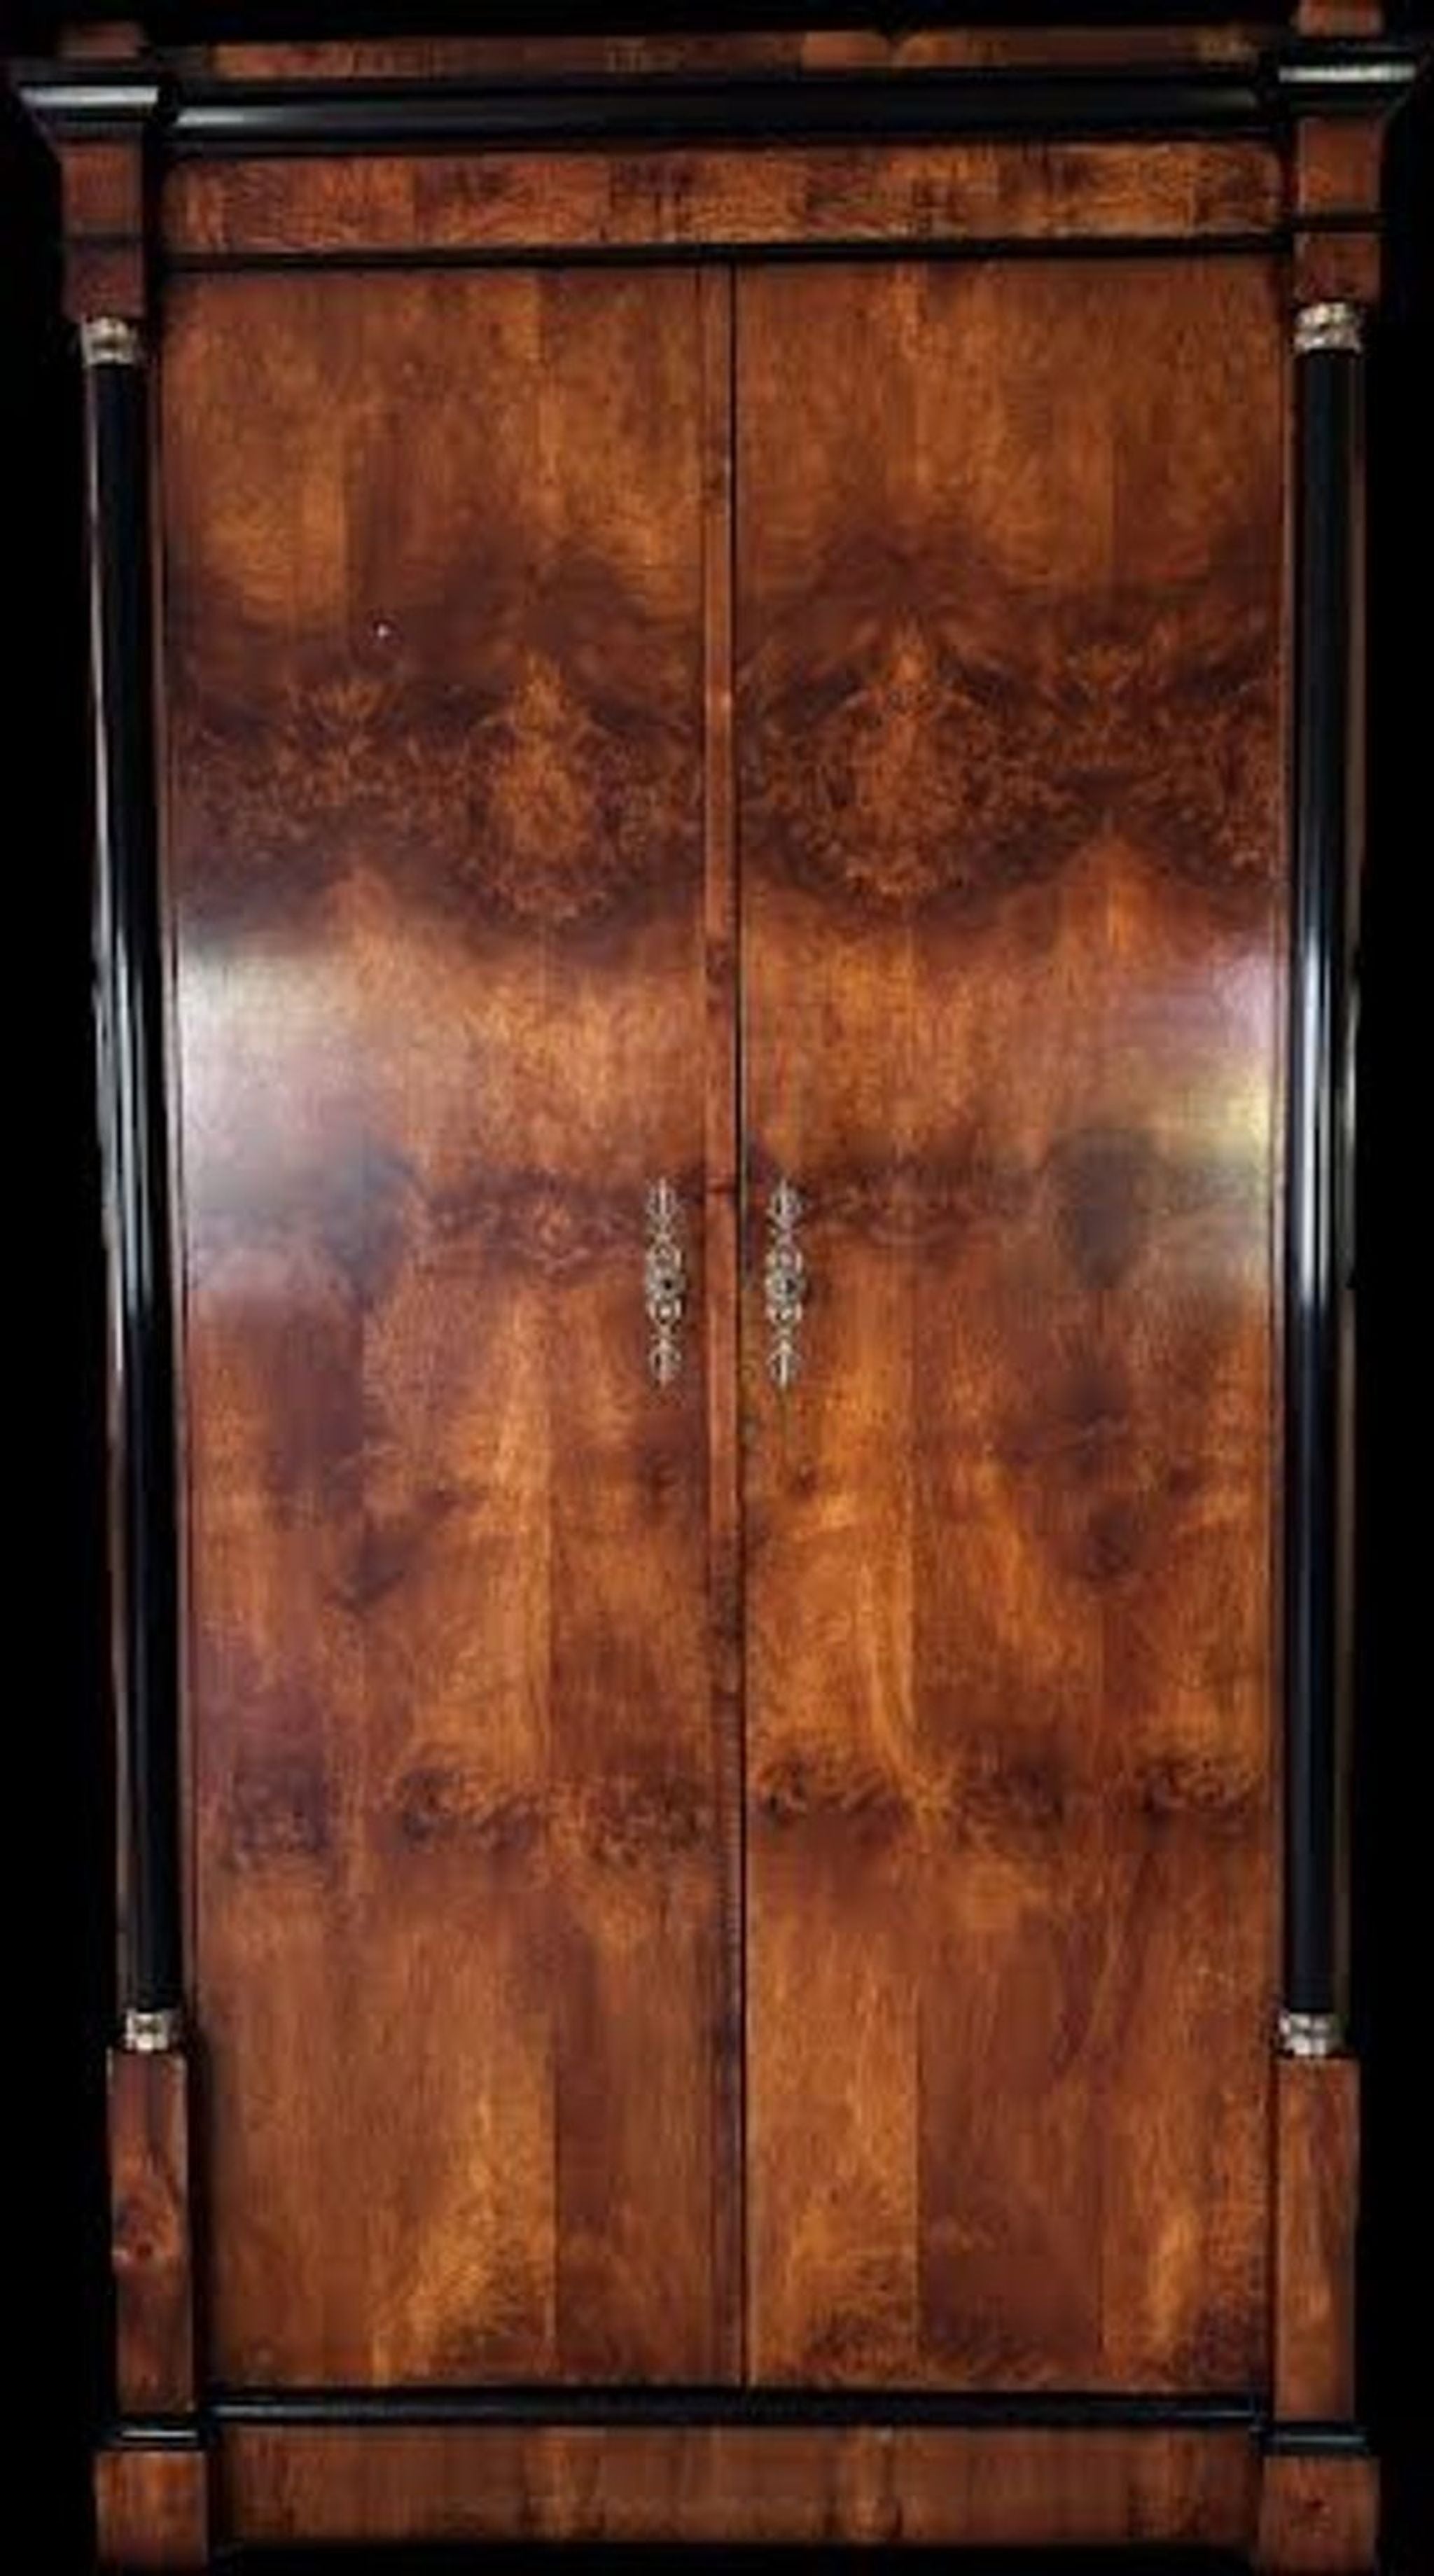 Darkened image featuring a Century Furniture burlwood armoire, closed, highlighting wood grain details.